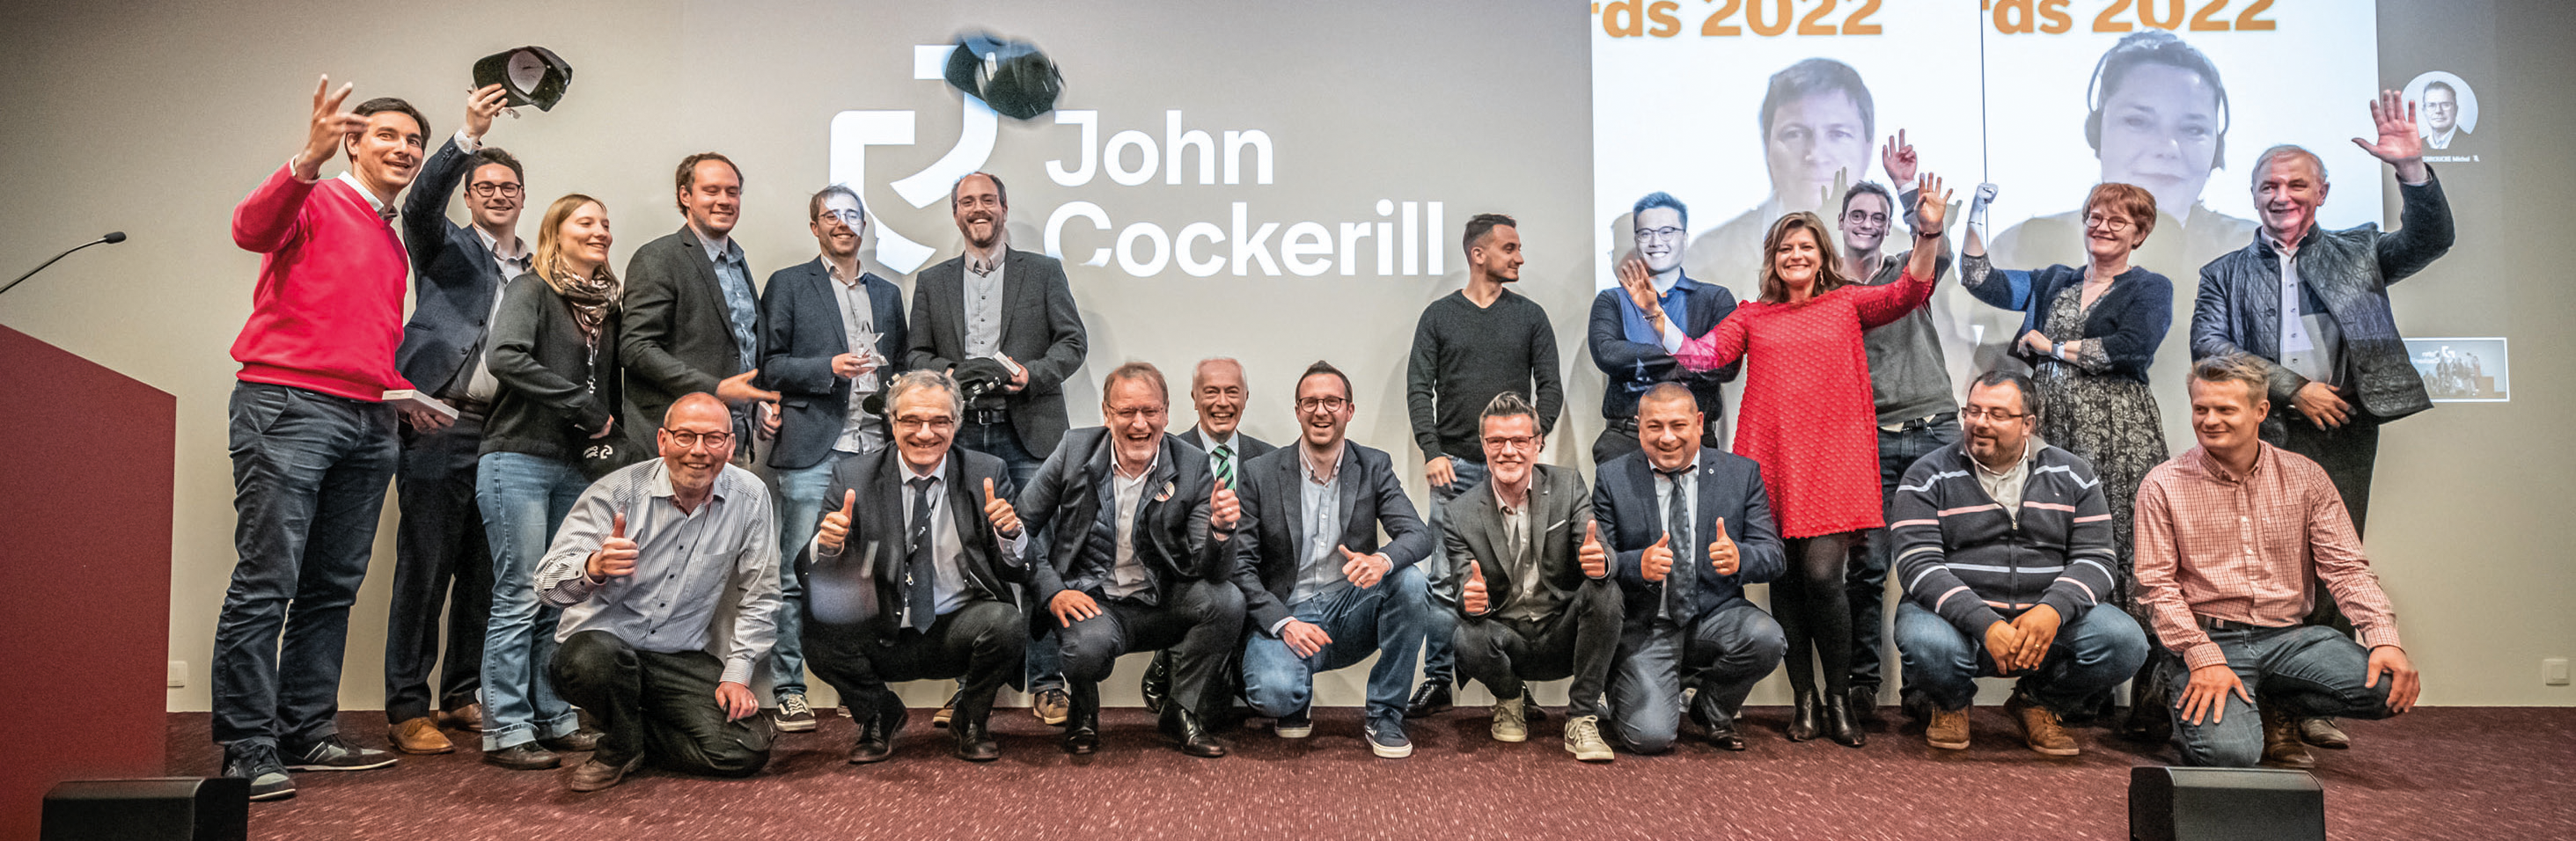 John Cockerill Awards : les meilleures innovations 2021 à l’honneur